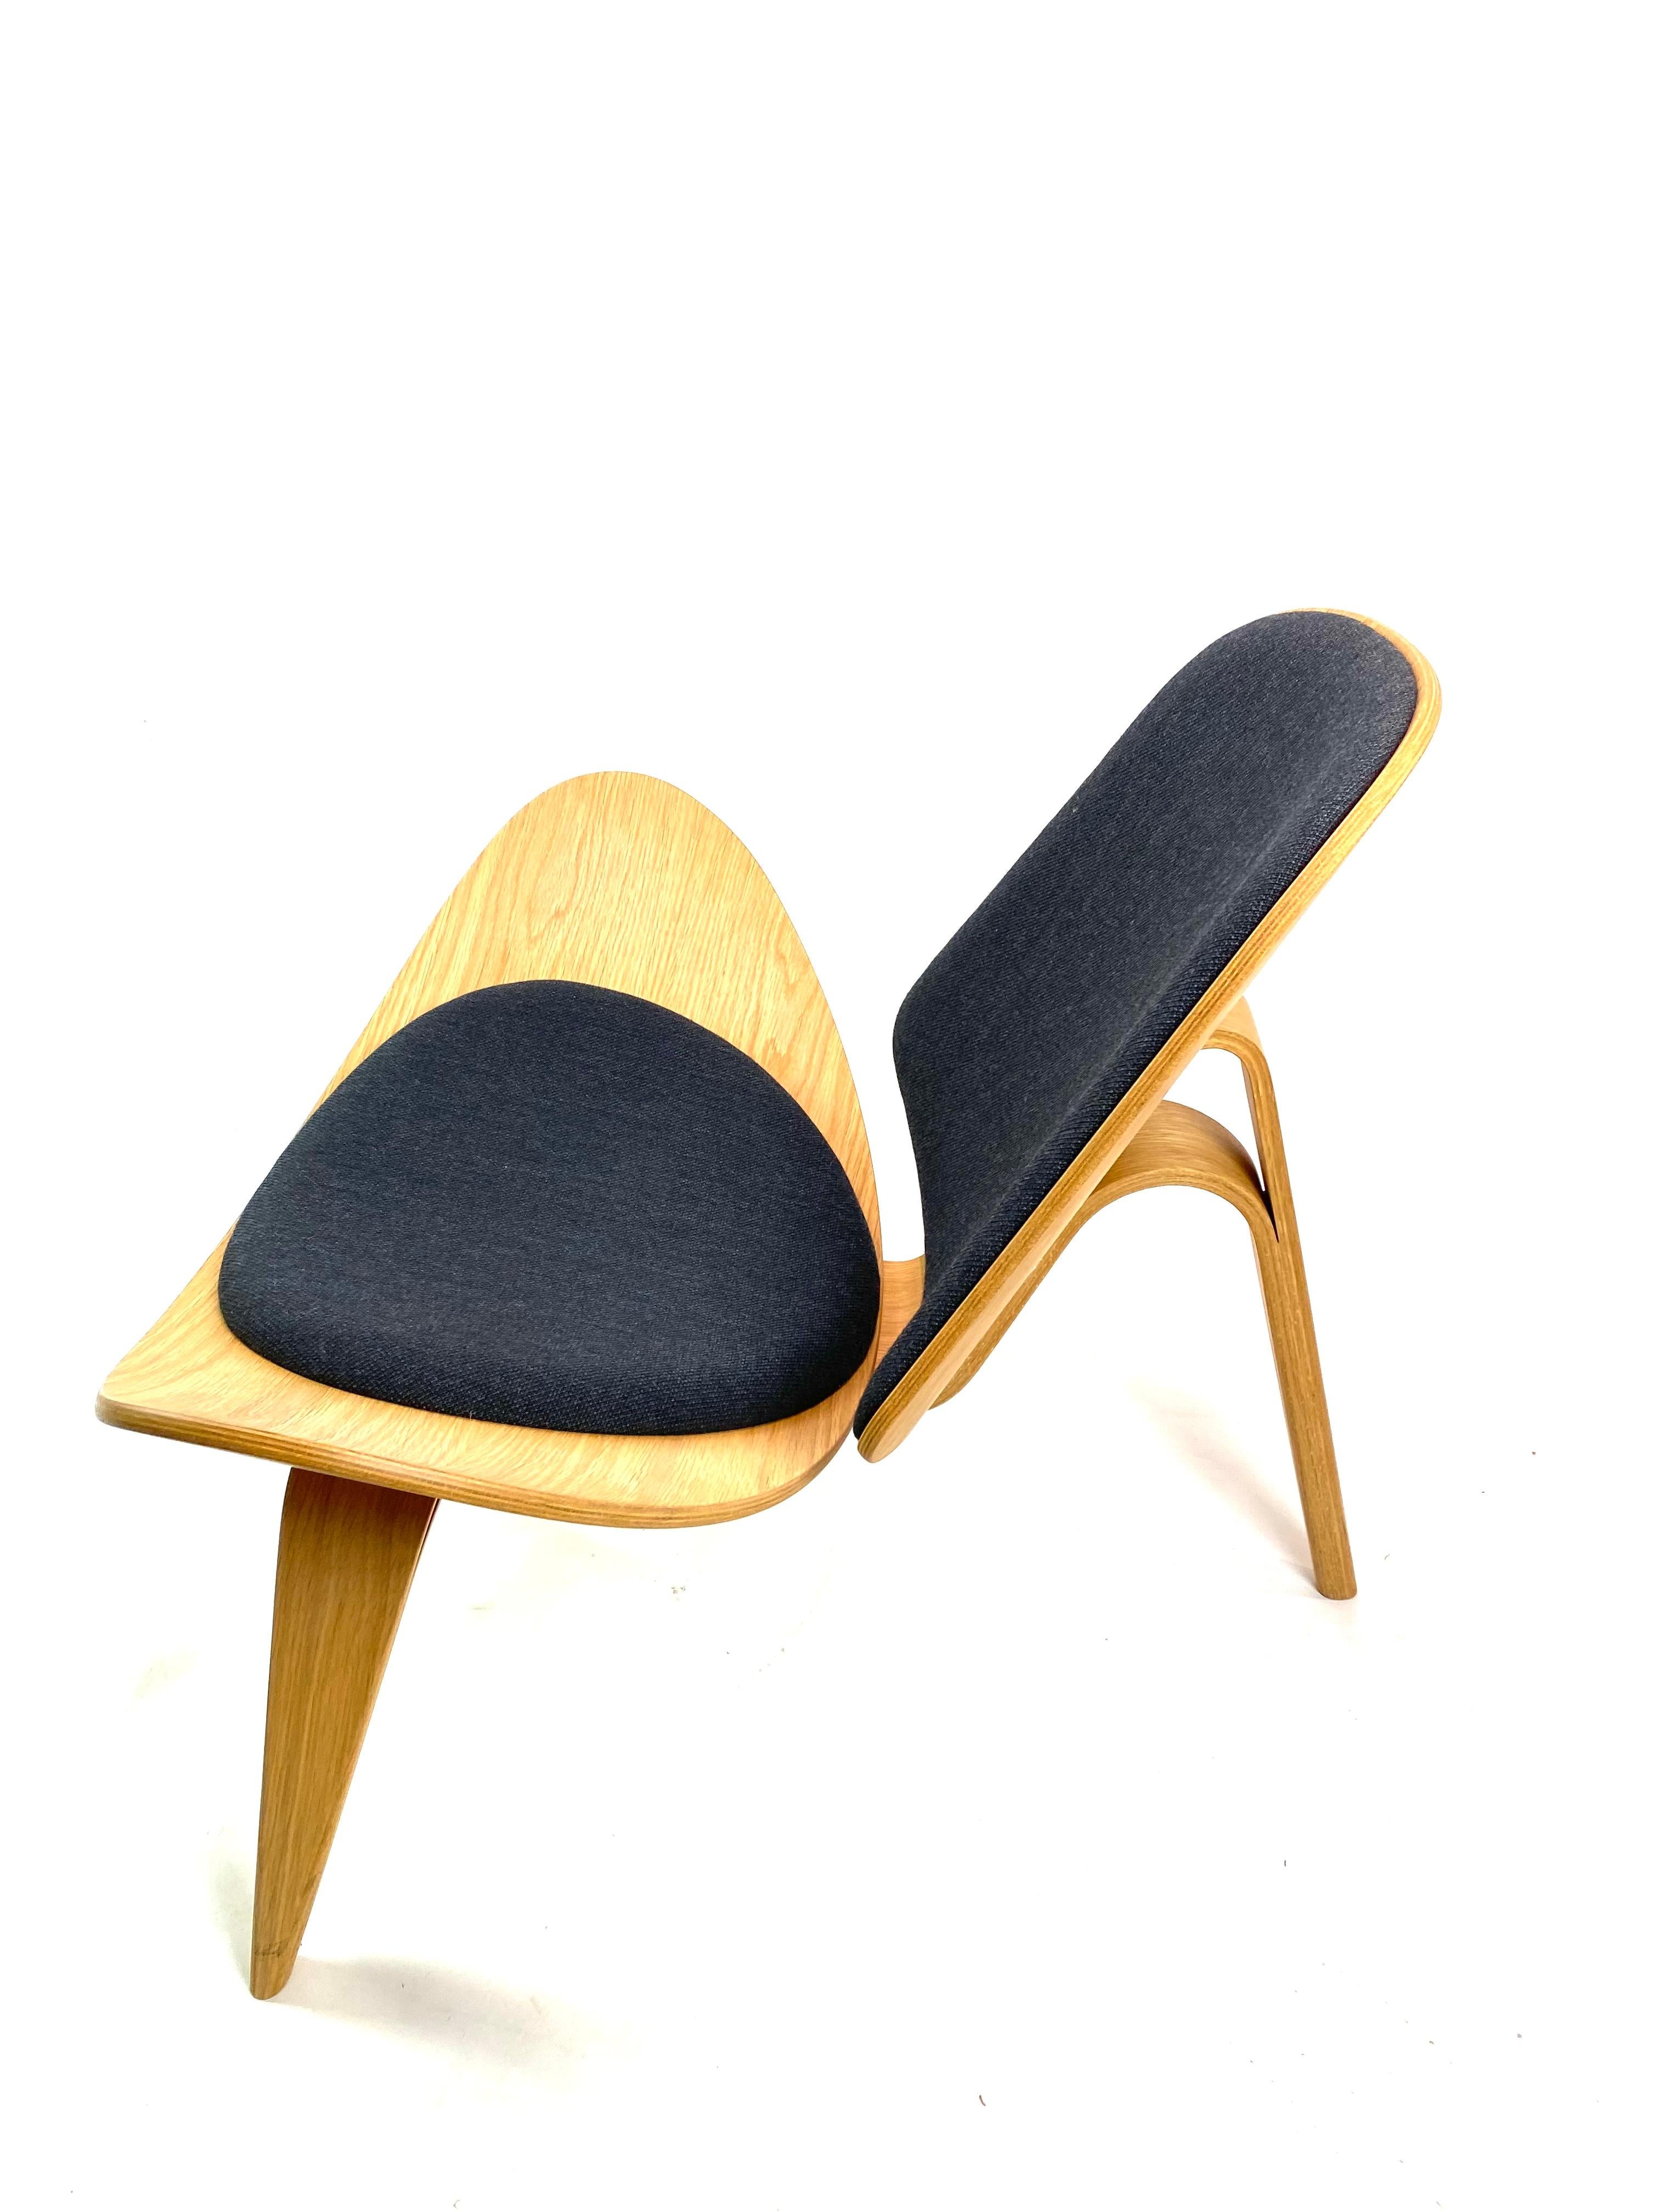 Oiled Vintage Shell Chair by Hans J. Wegner, Designed in 1963